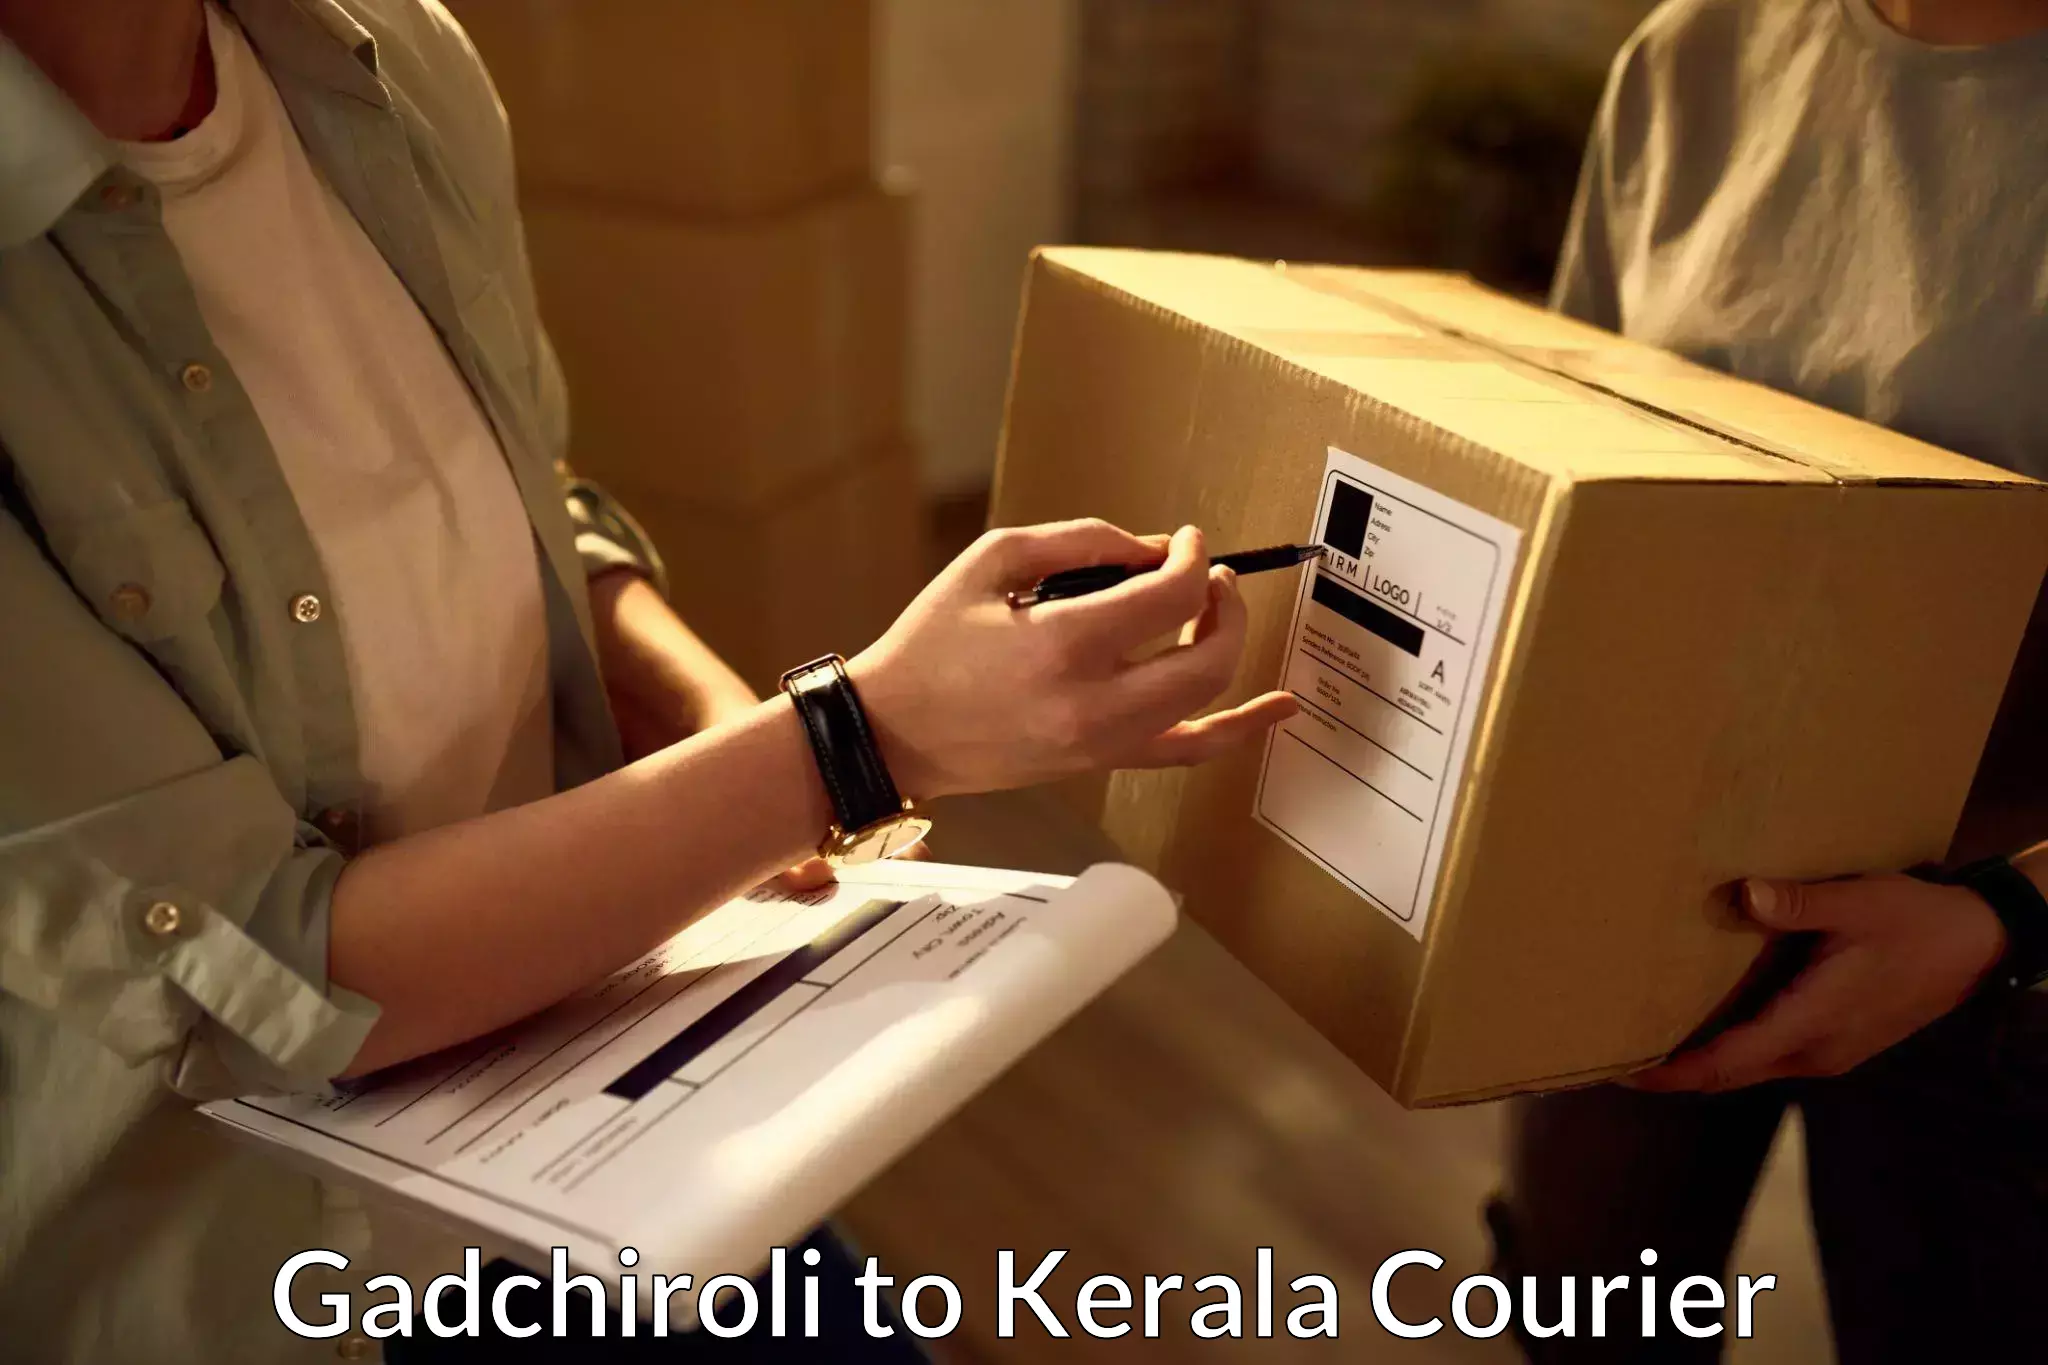 Global courier networks Gadchiroli to Kozhikode